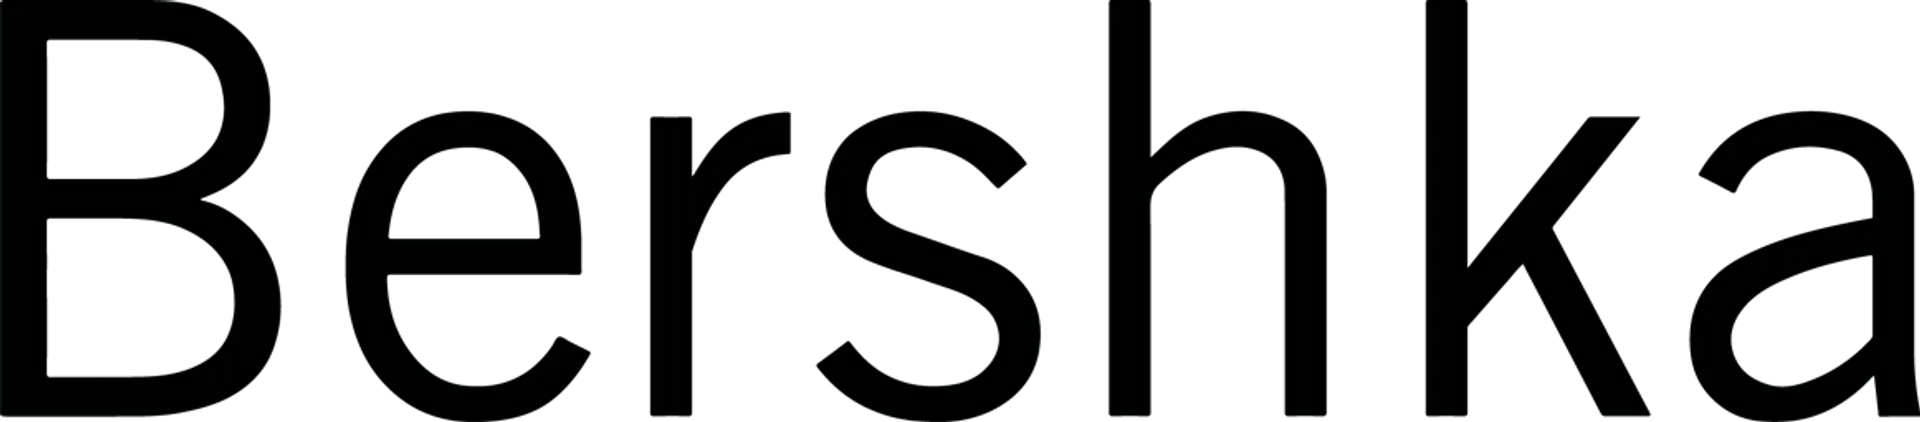 BERSHKA logo de catálogo